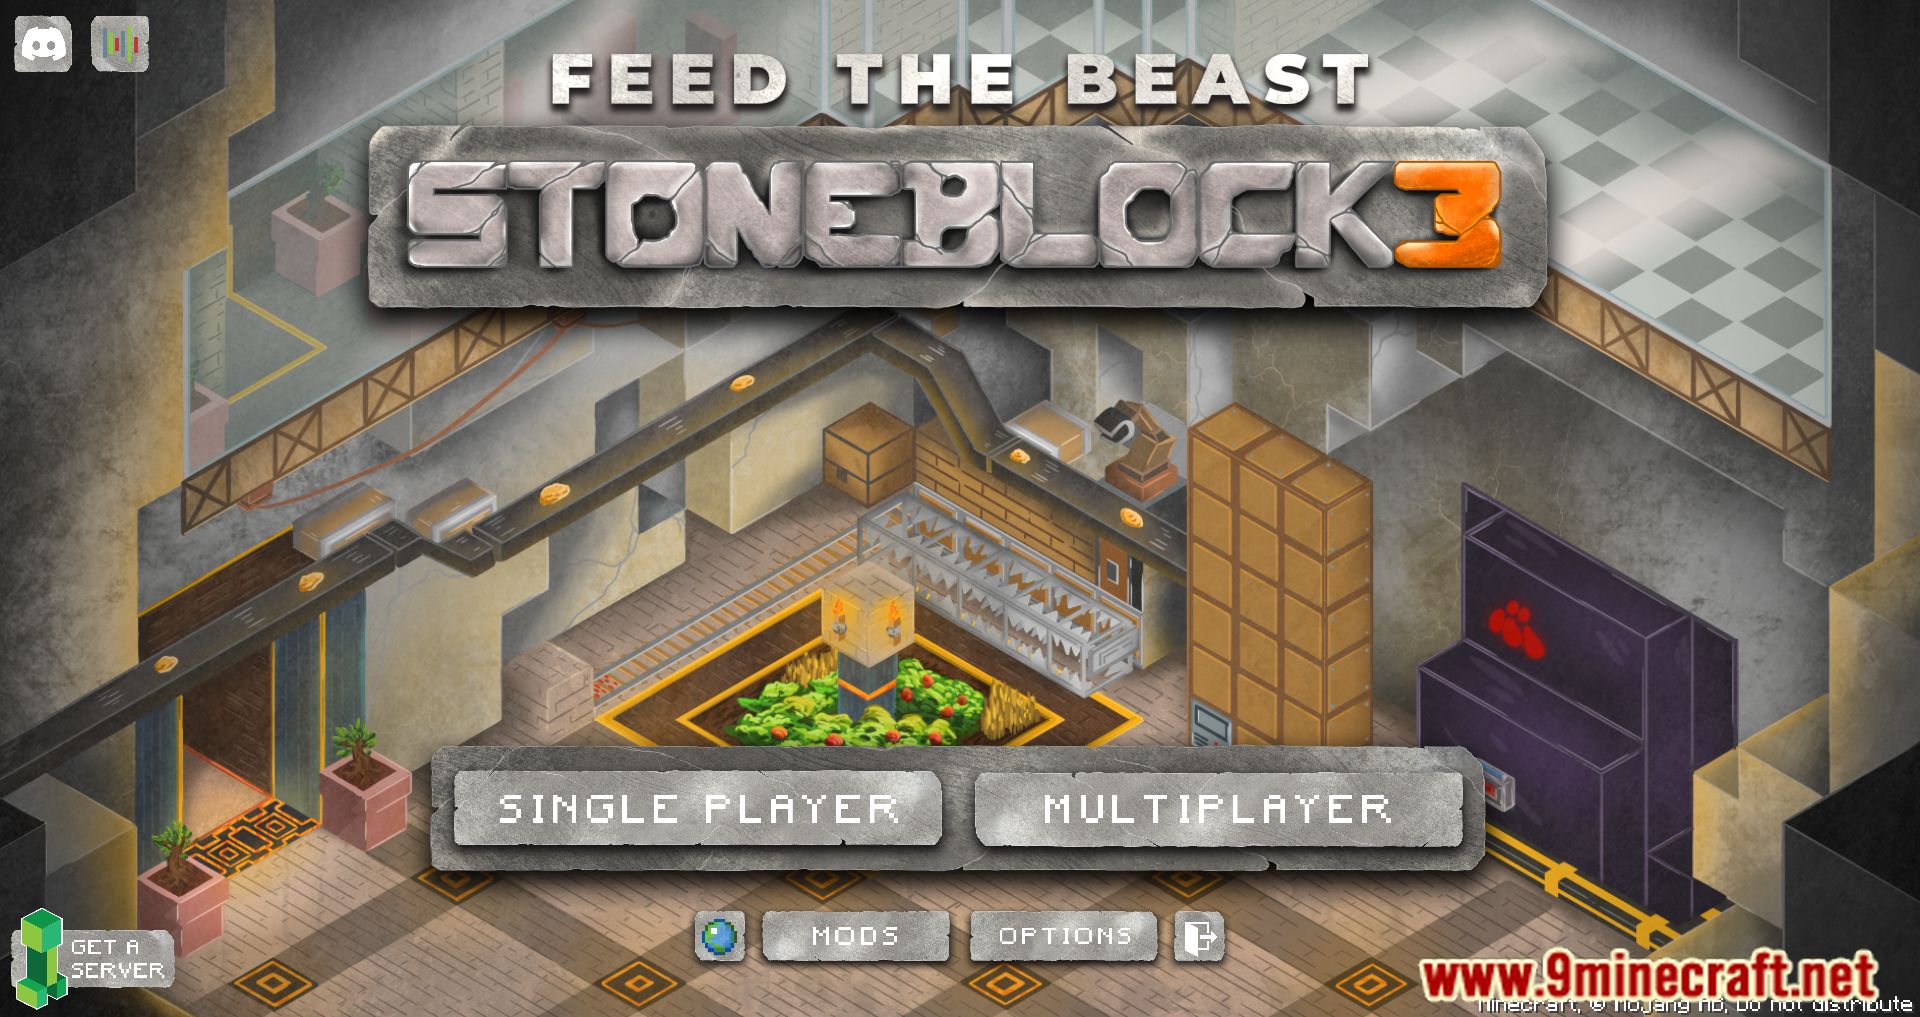 FTB Stoneblock 3 Modpack (1.18.2) - Build A Base that Really Rocks! 2